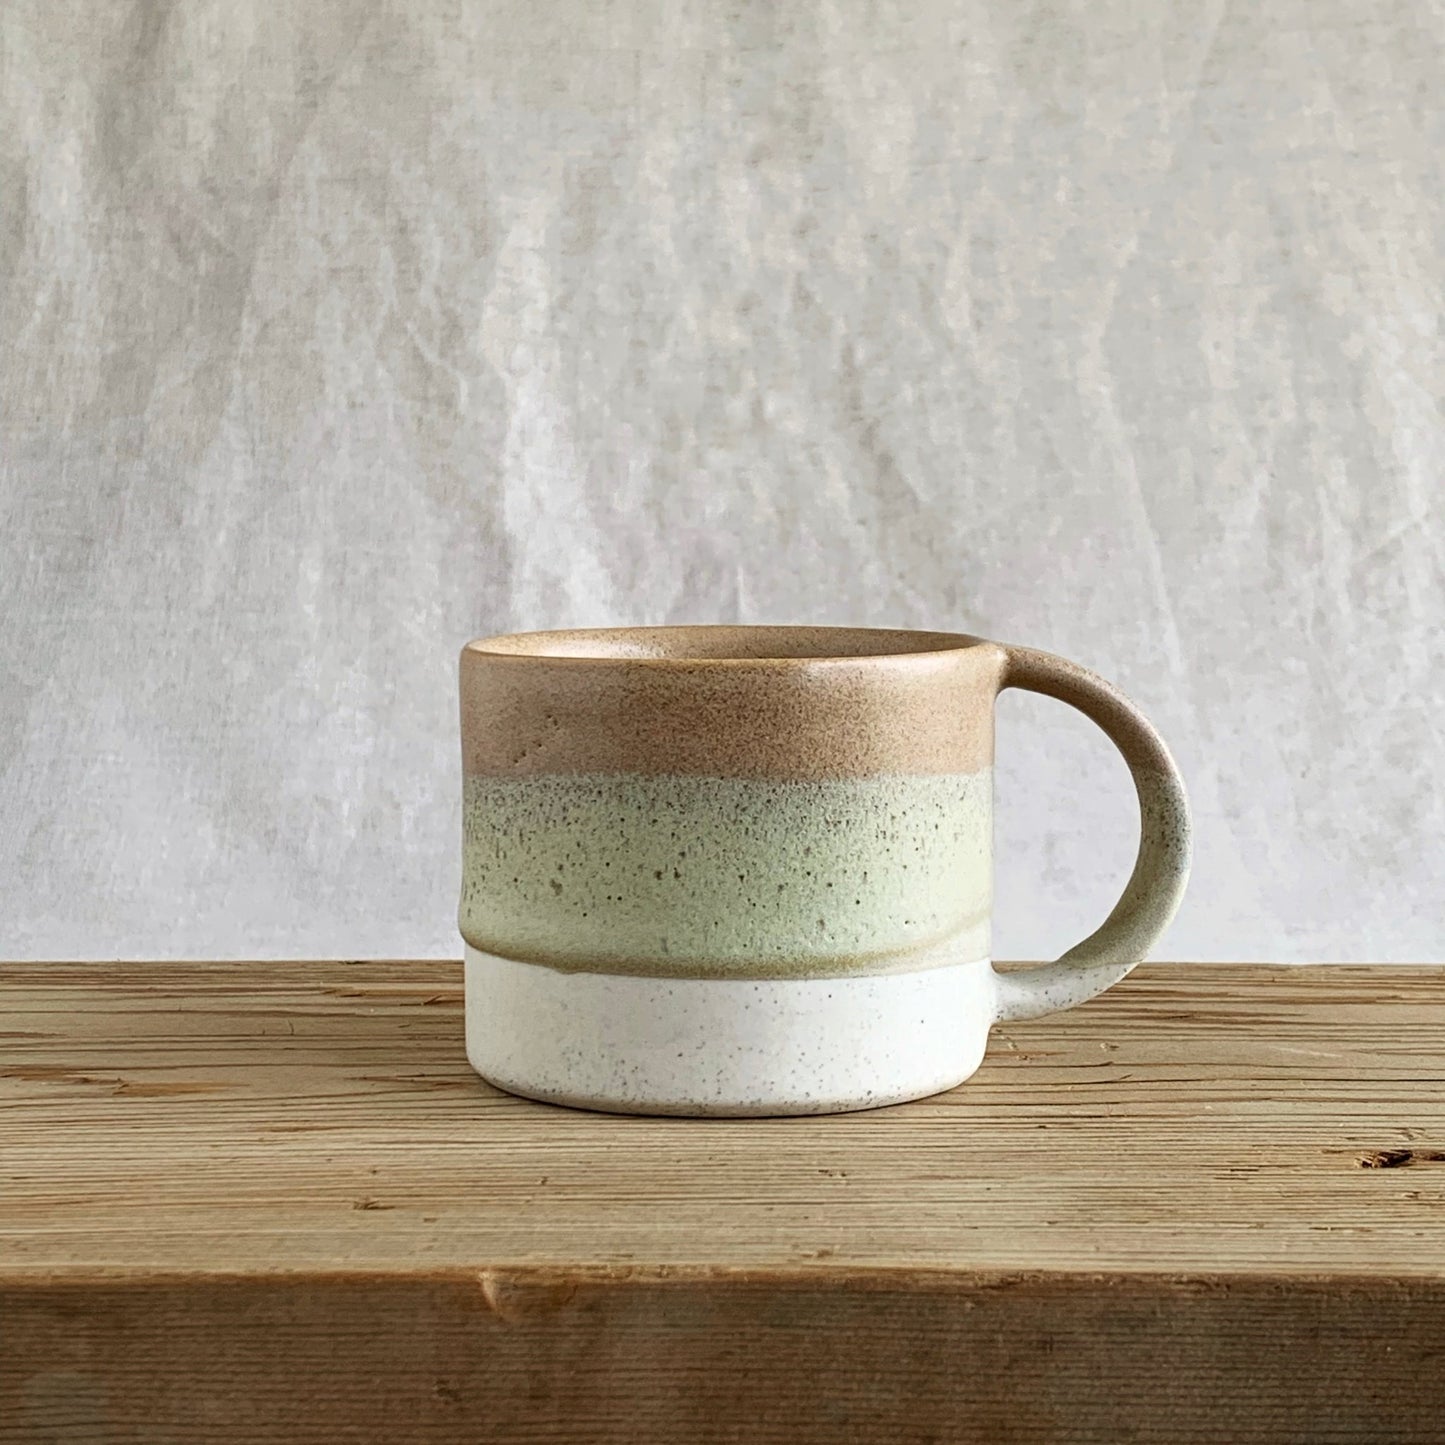 Mug Toffee & Earthy Green - handmade in the Henry & Tunks ceramic studio, Maitland NSW